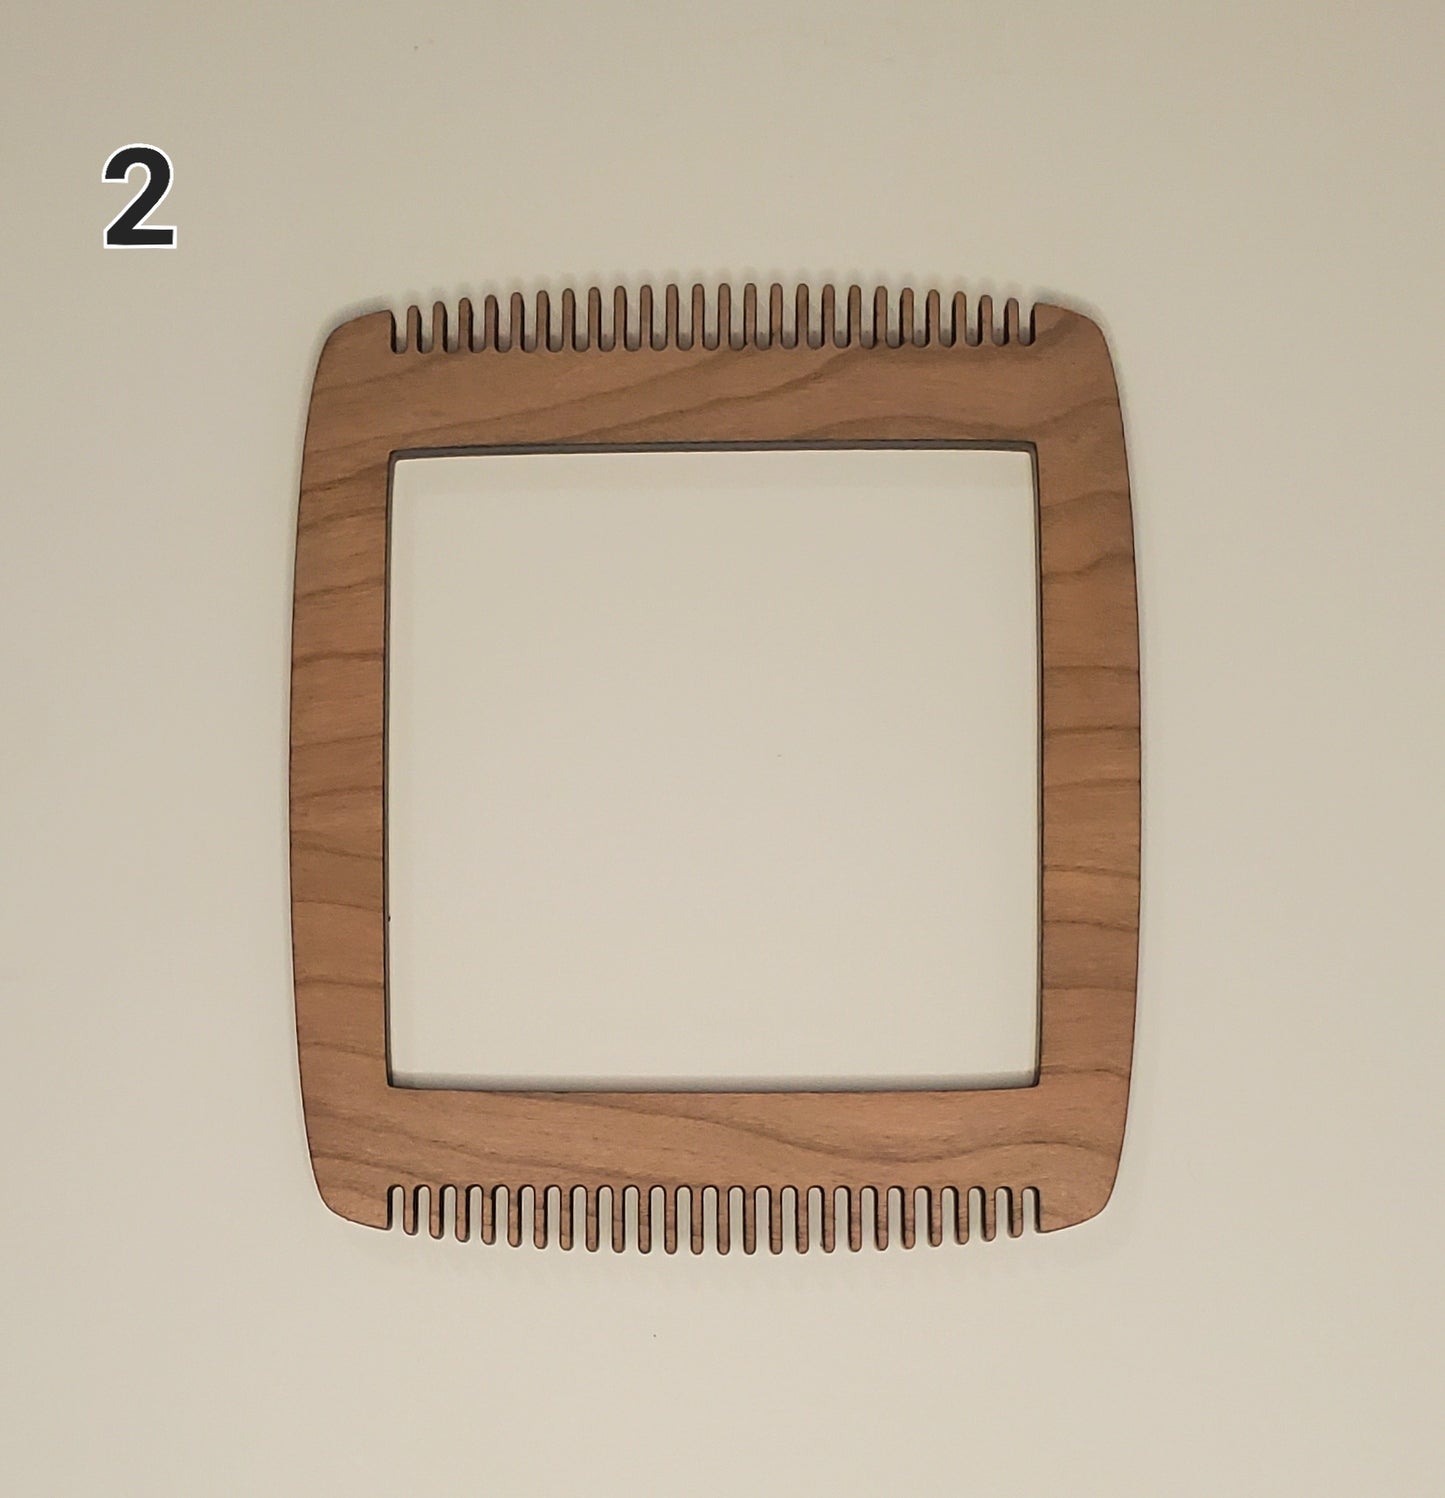 Small loom frame